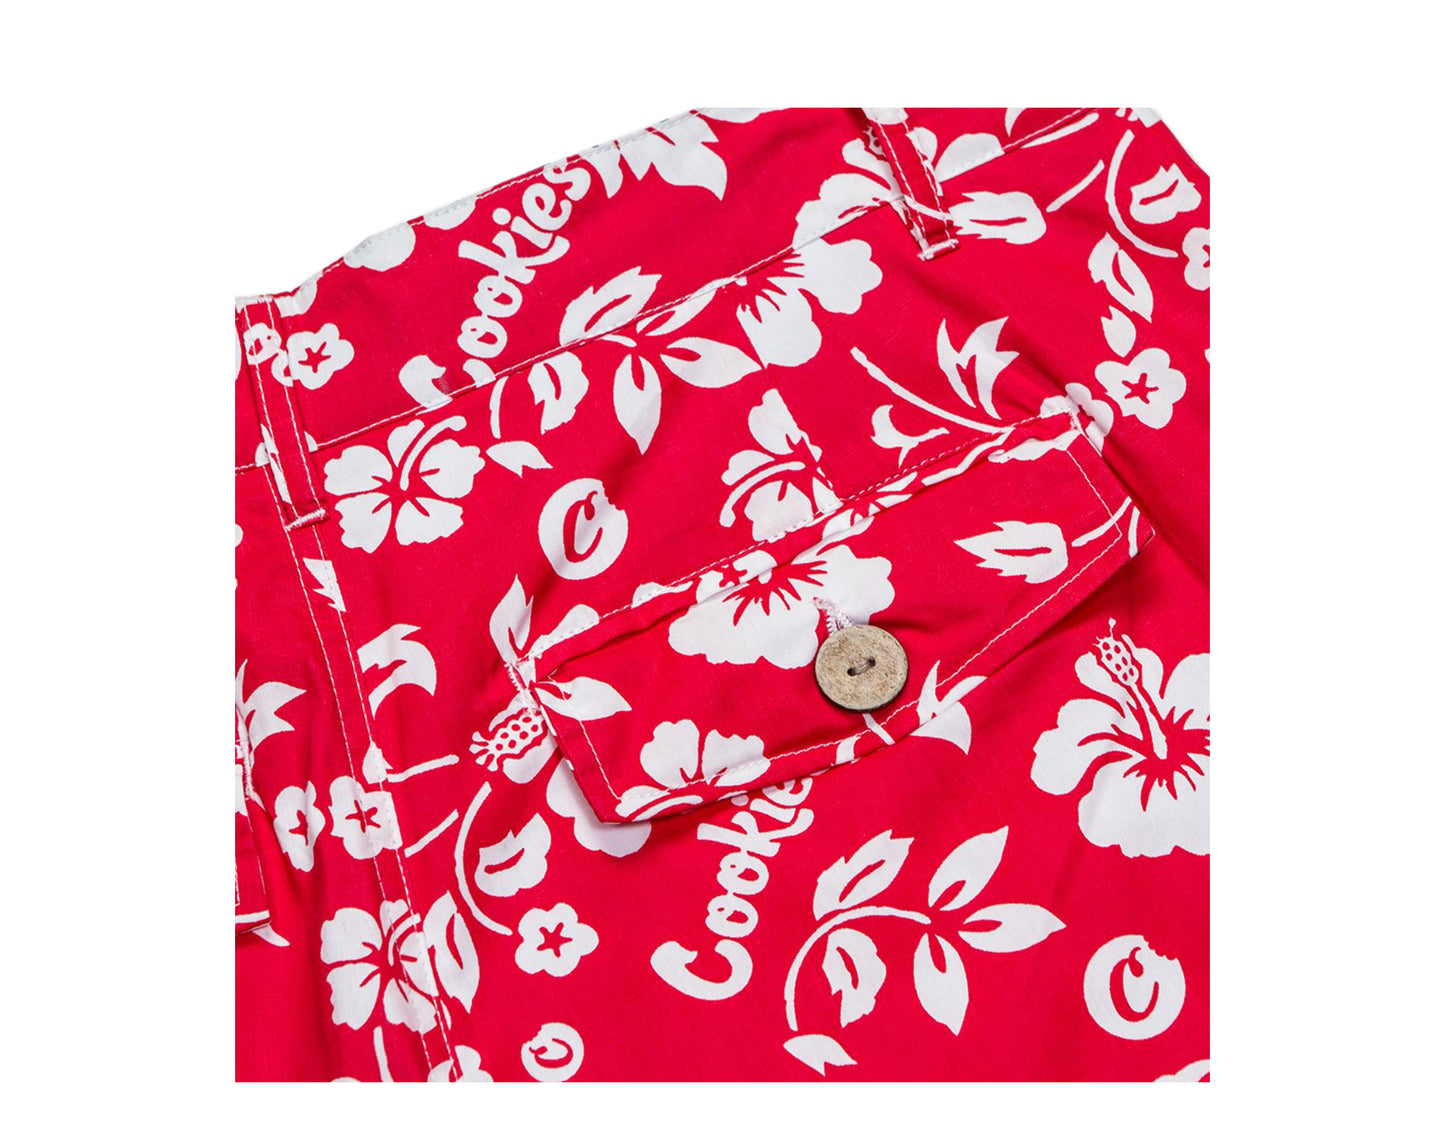 Cookies Waimea Cotton Poplin Flower Red/White Men's Shorts 1543B3989-RED